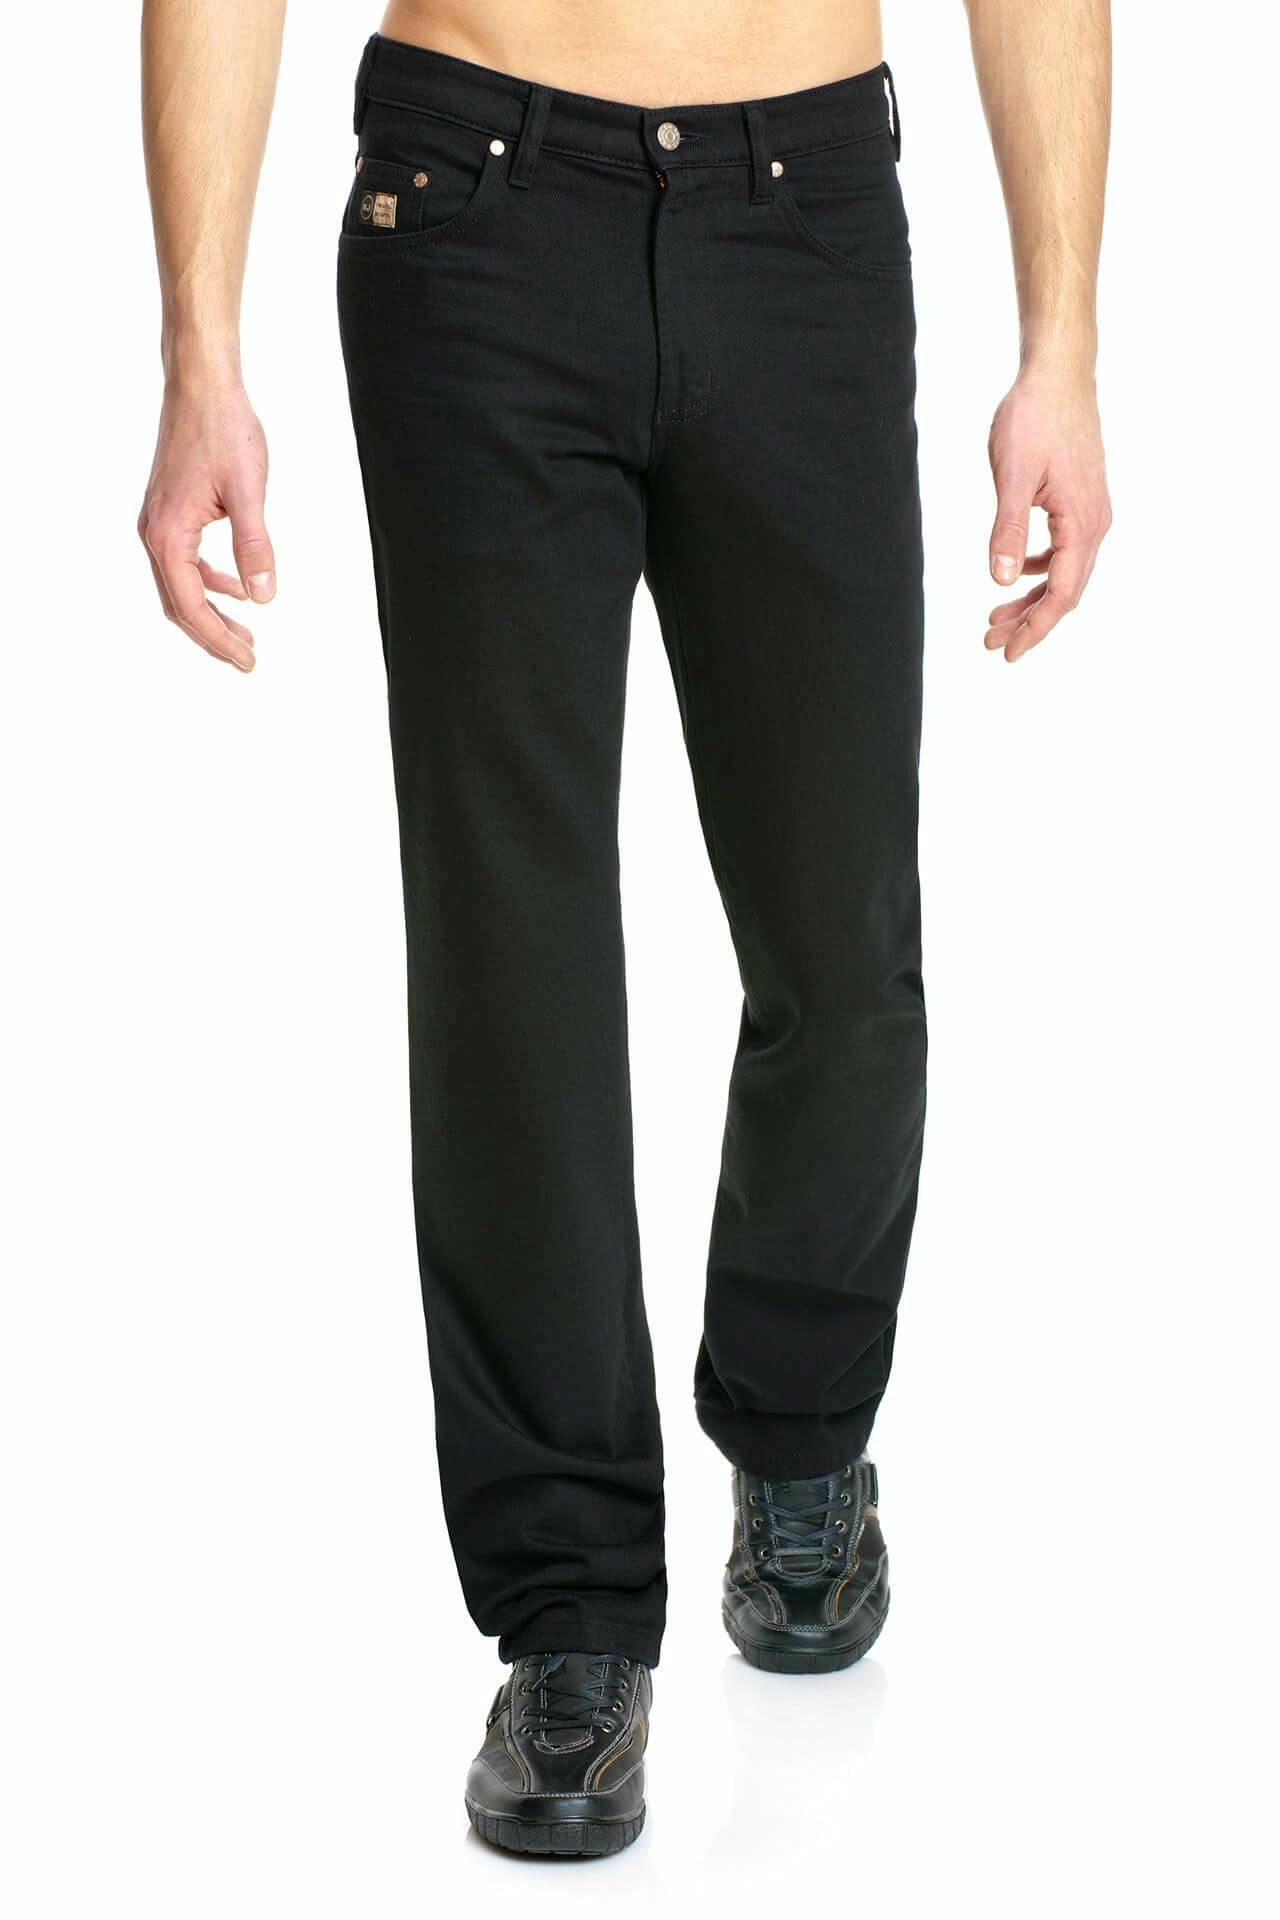 revils jeans 302 stretch black